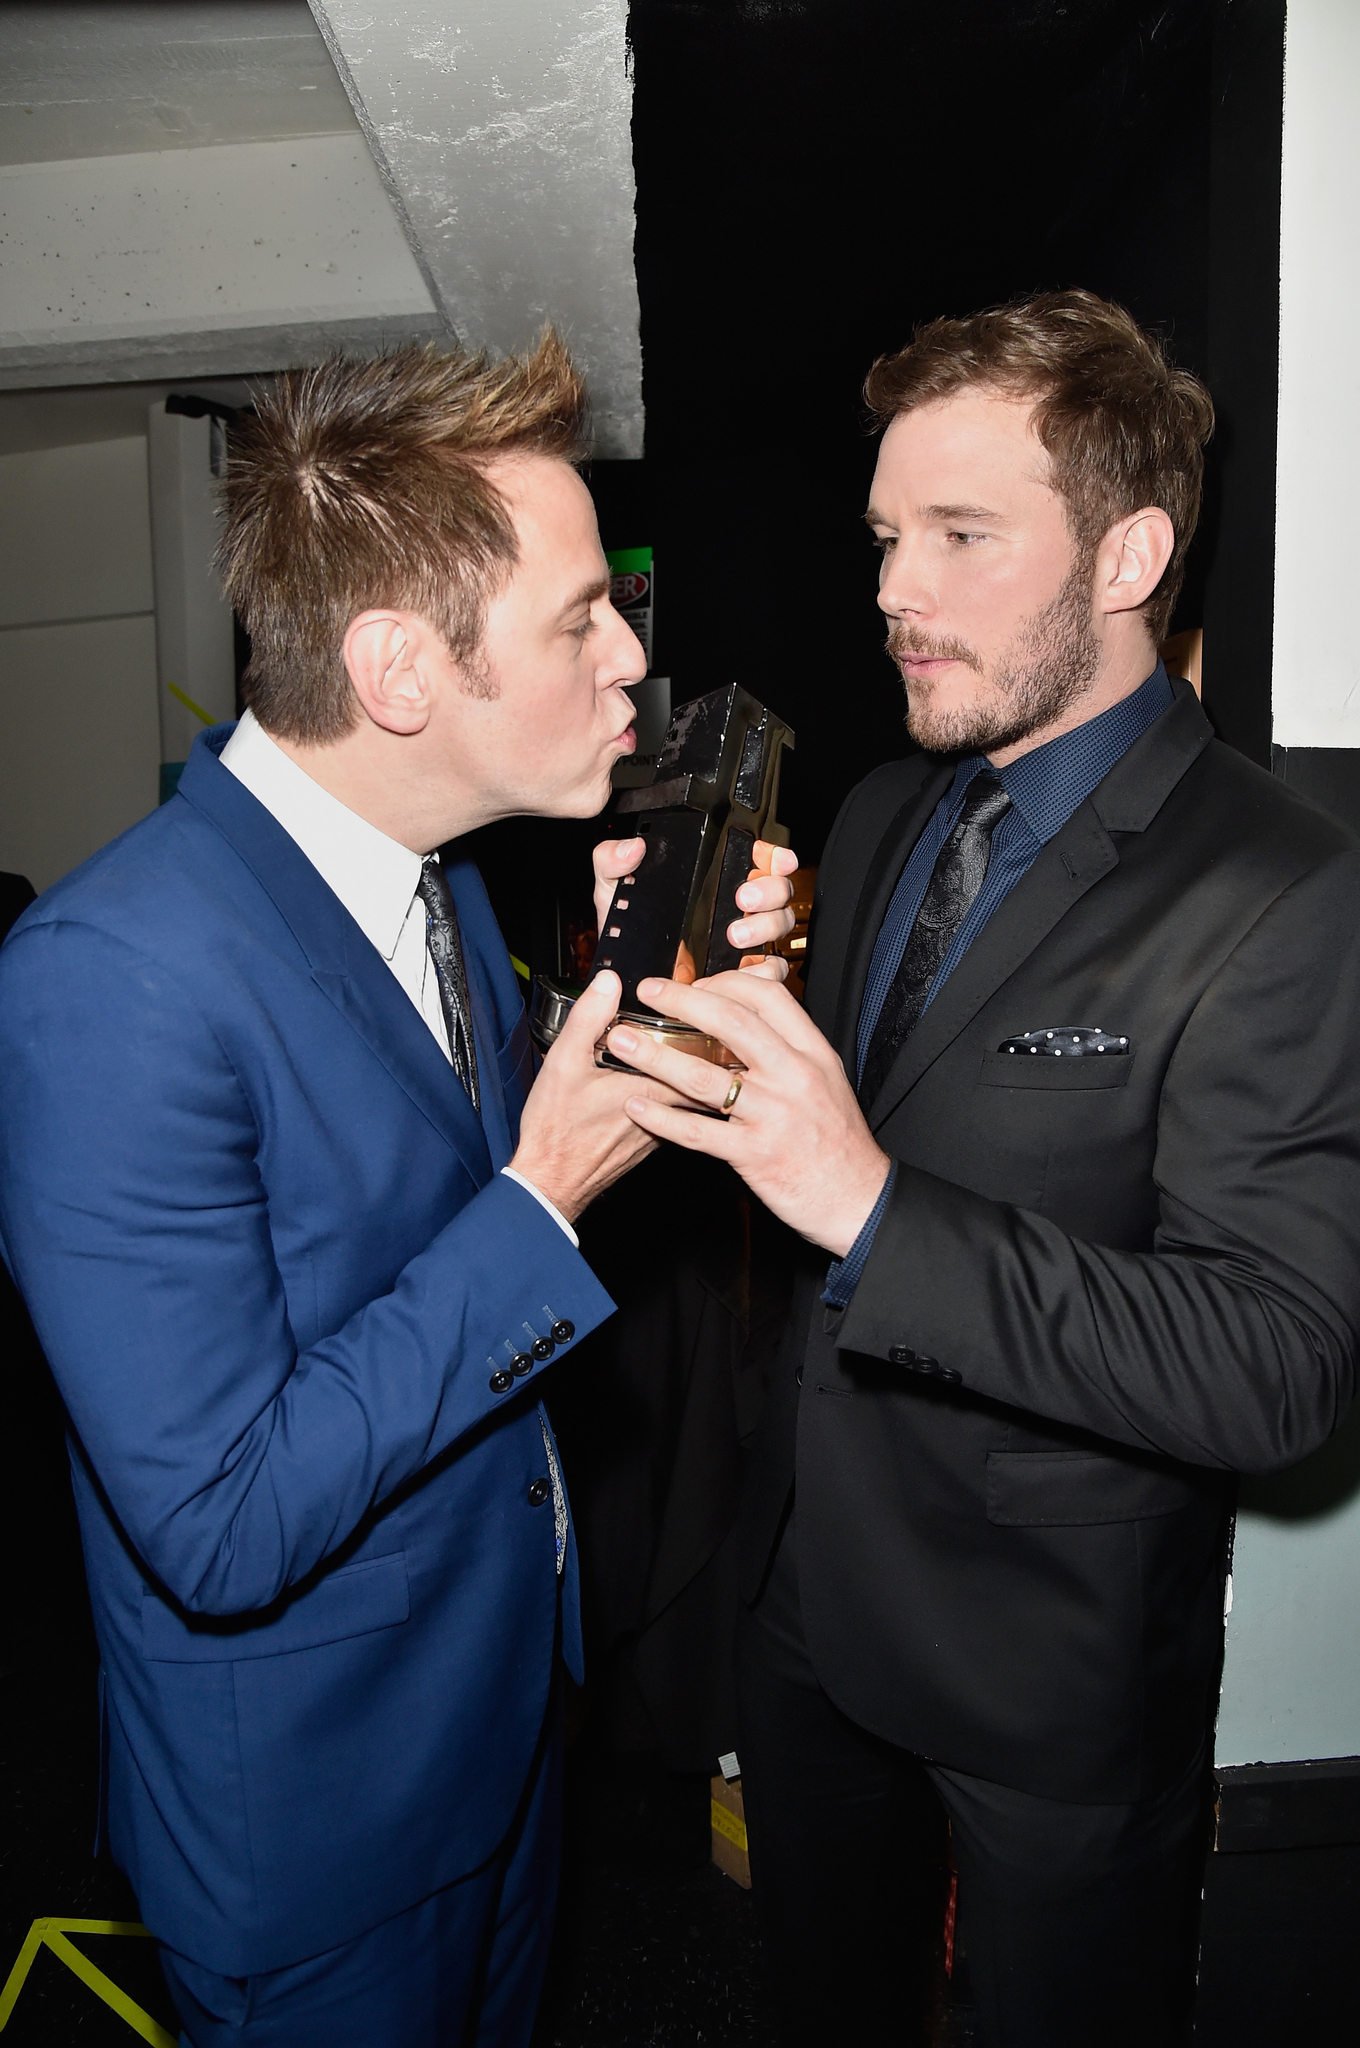 James Gunn and Chris Pratt at event of Hollywood Film Awards (2014)